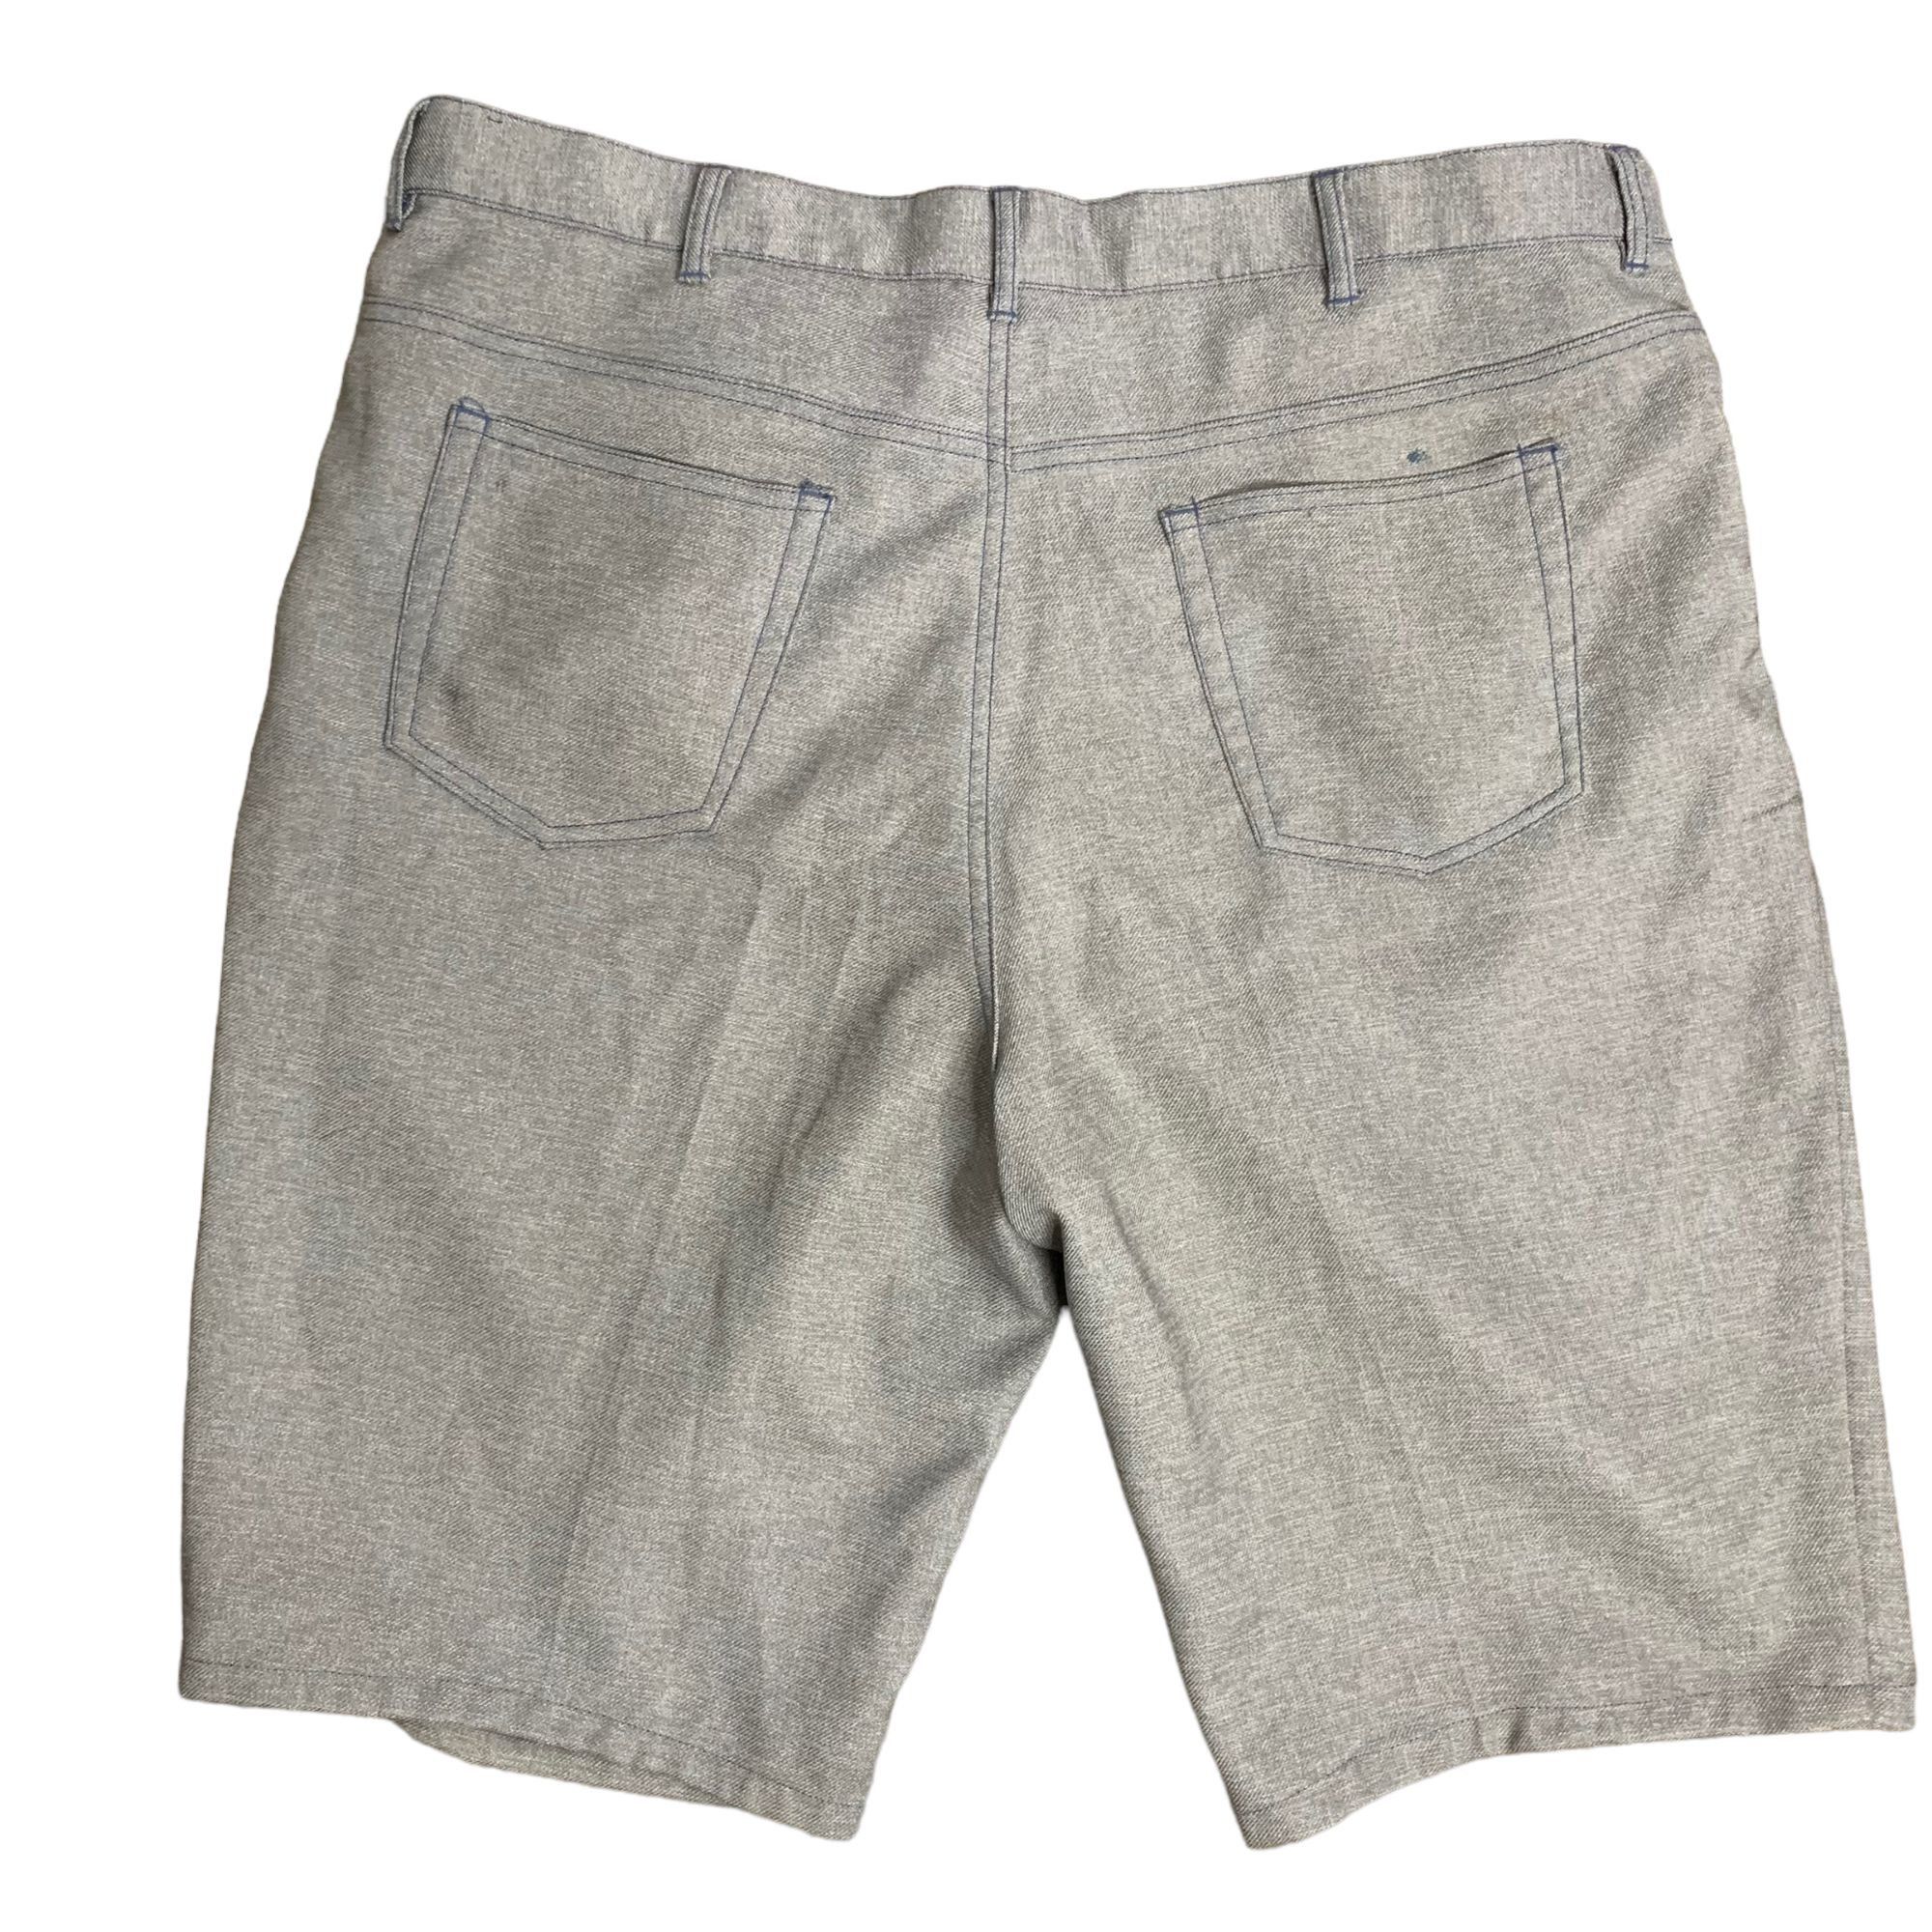 Haband Vintage Haband Fit Forever Shorts 40 Grey High Rise Pockets Size US 40 / EU 56 - 5 Thumbnail